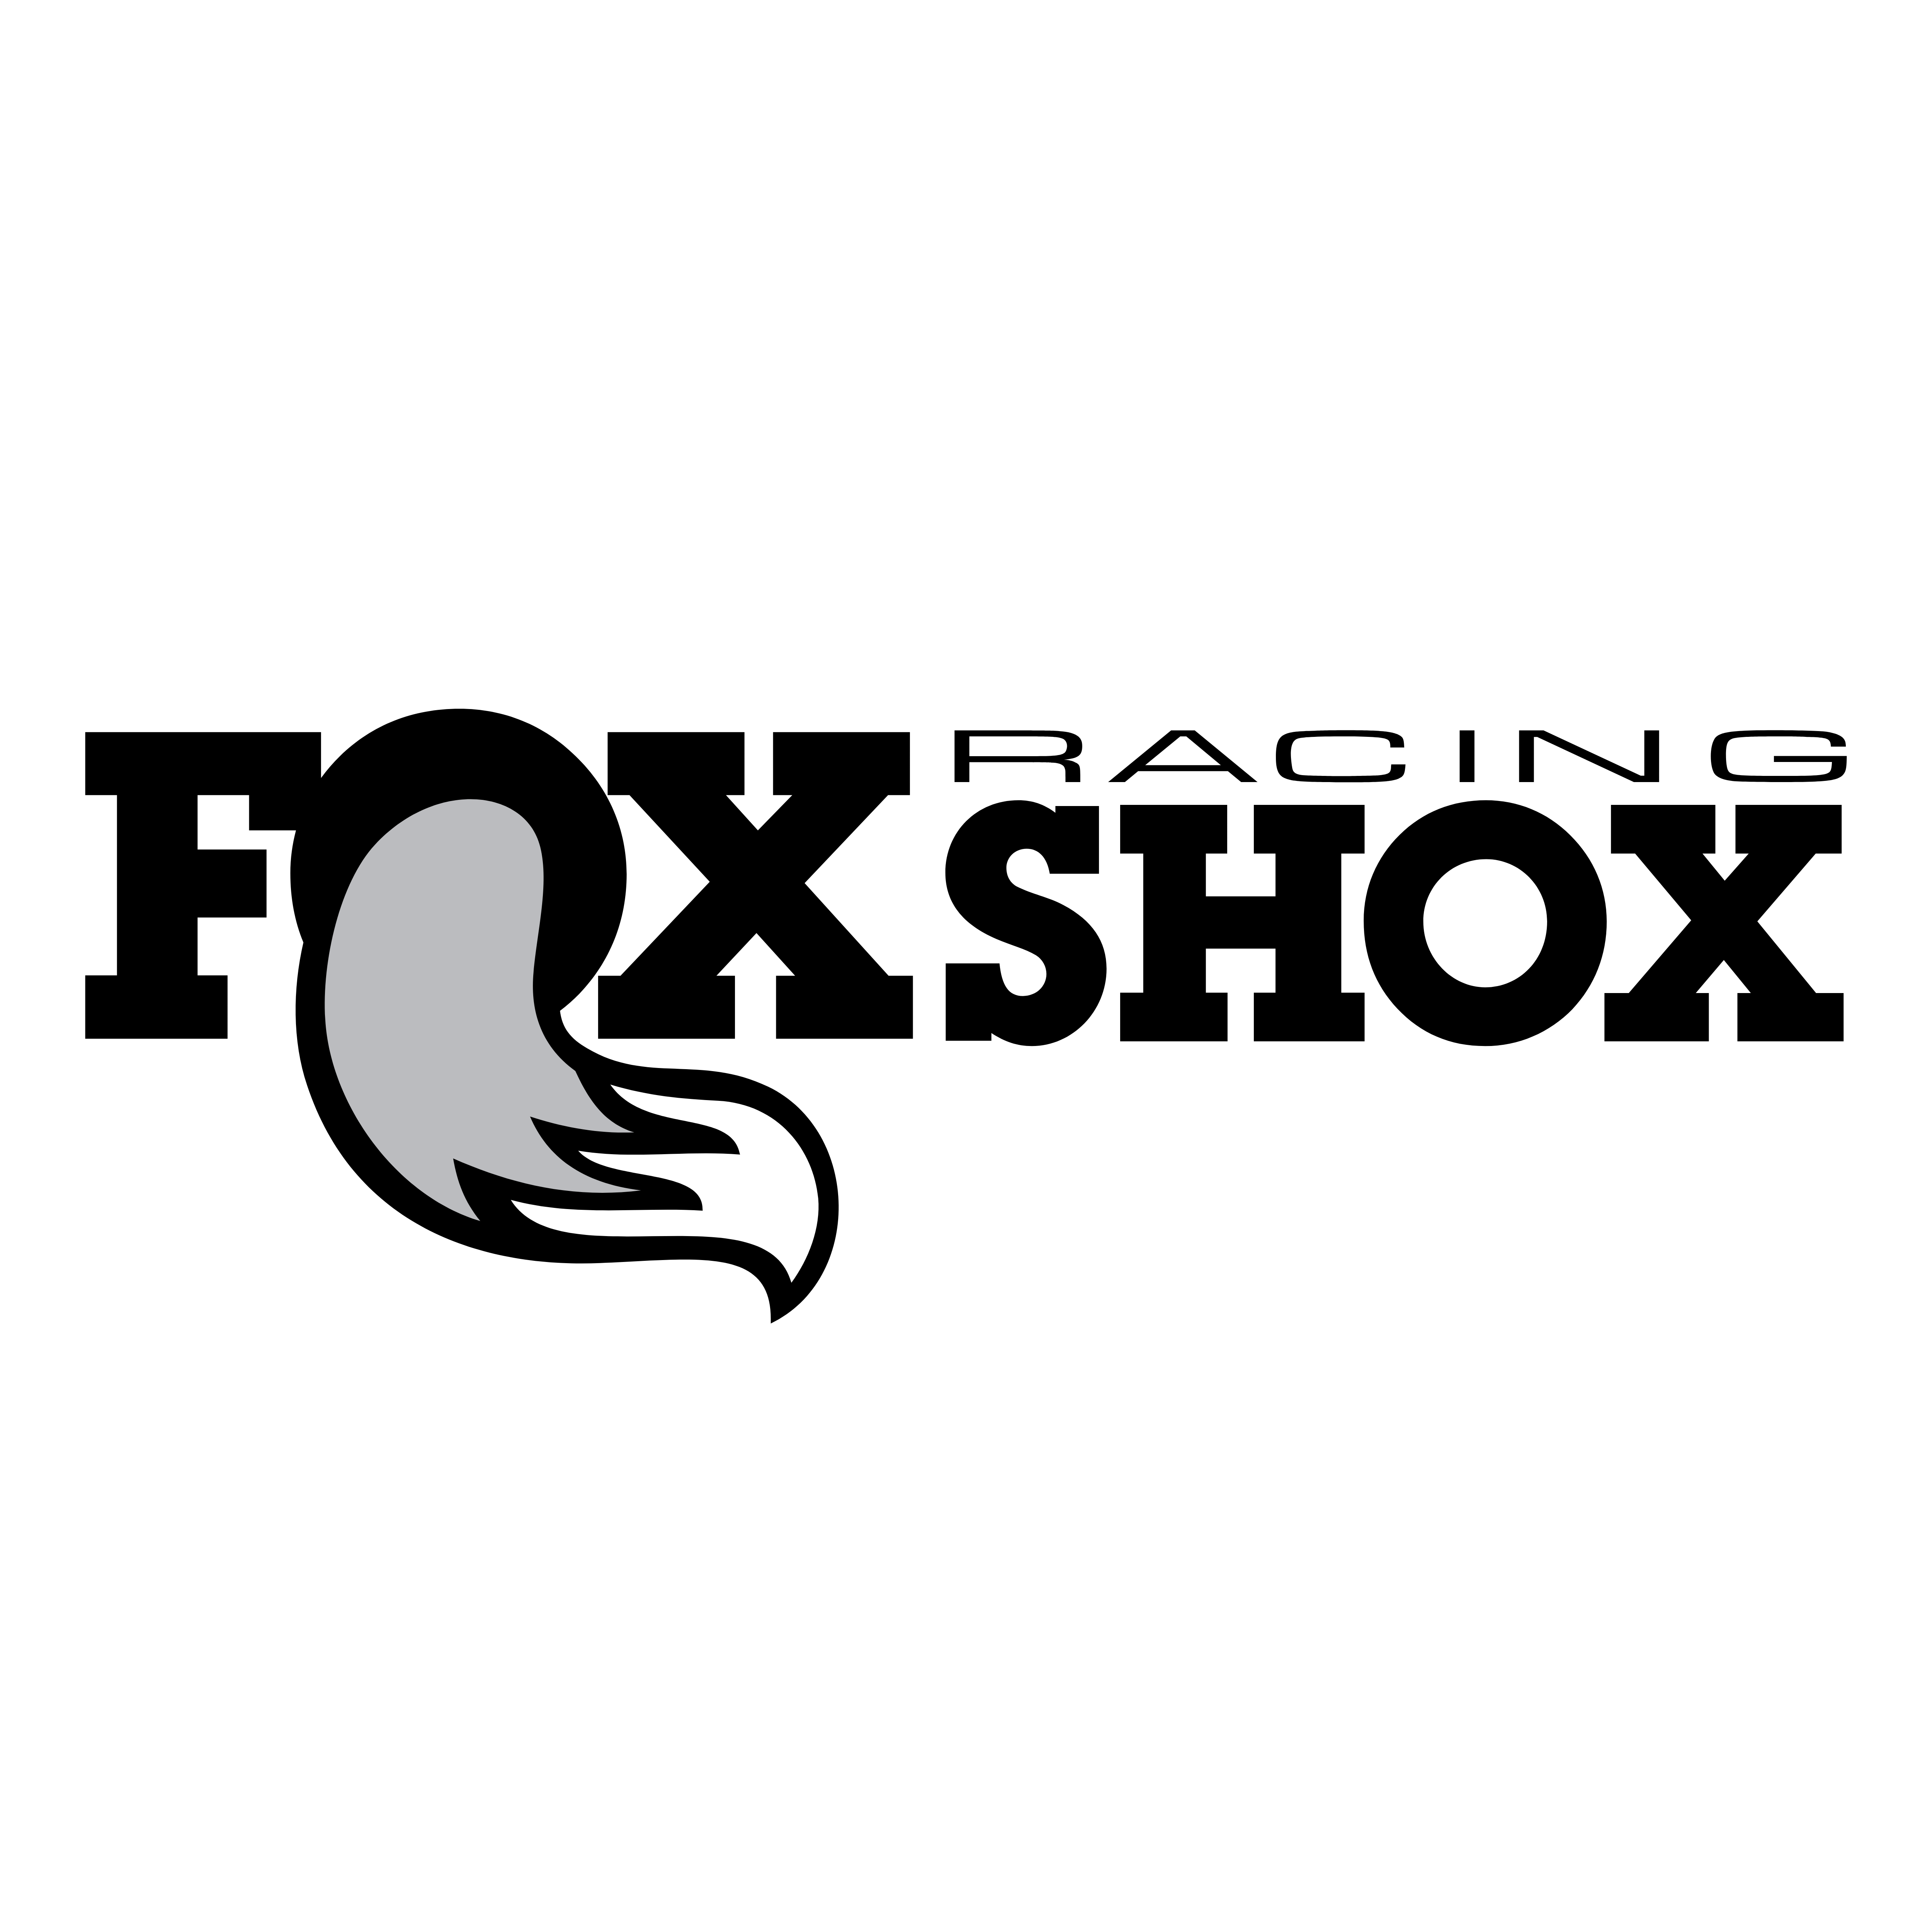 Фирма fox. Fox Racing Shox. Fox бренд. Fox логотип. Логотип Shox.